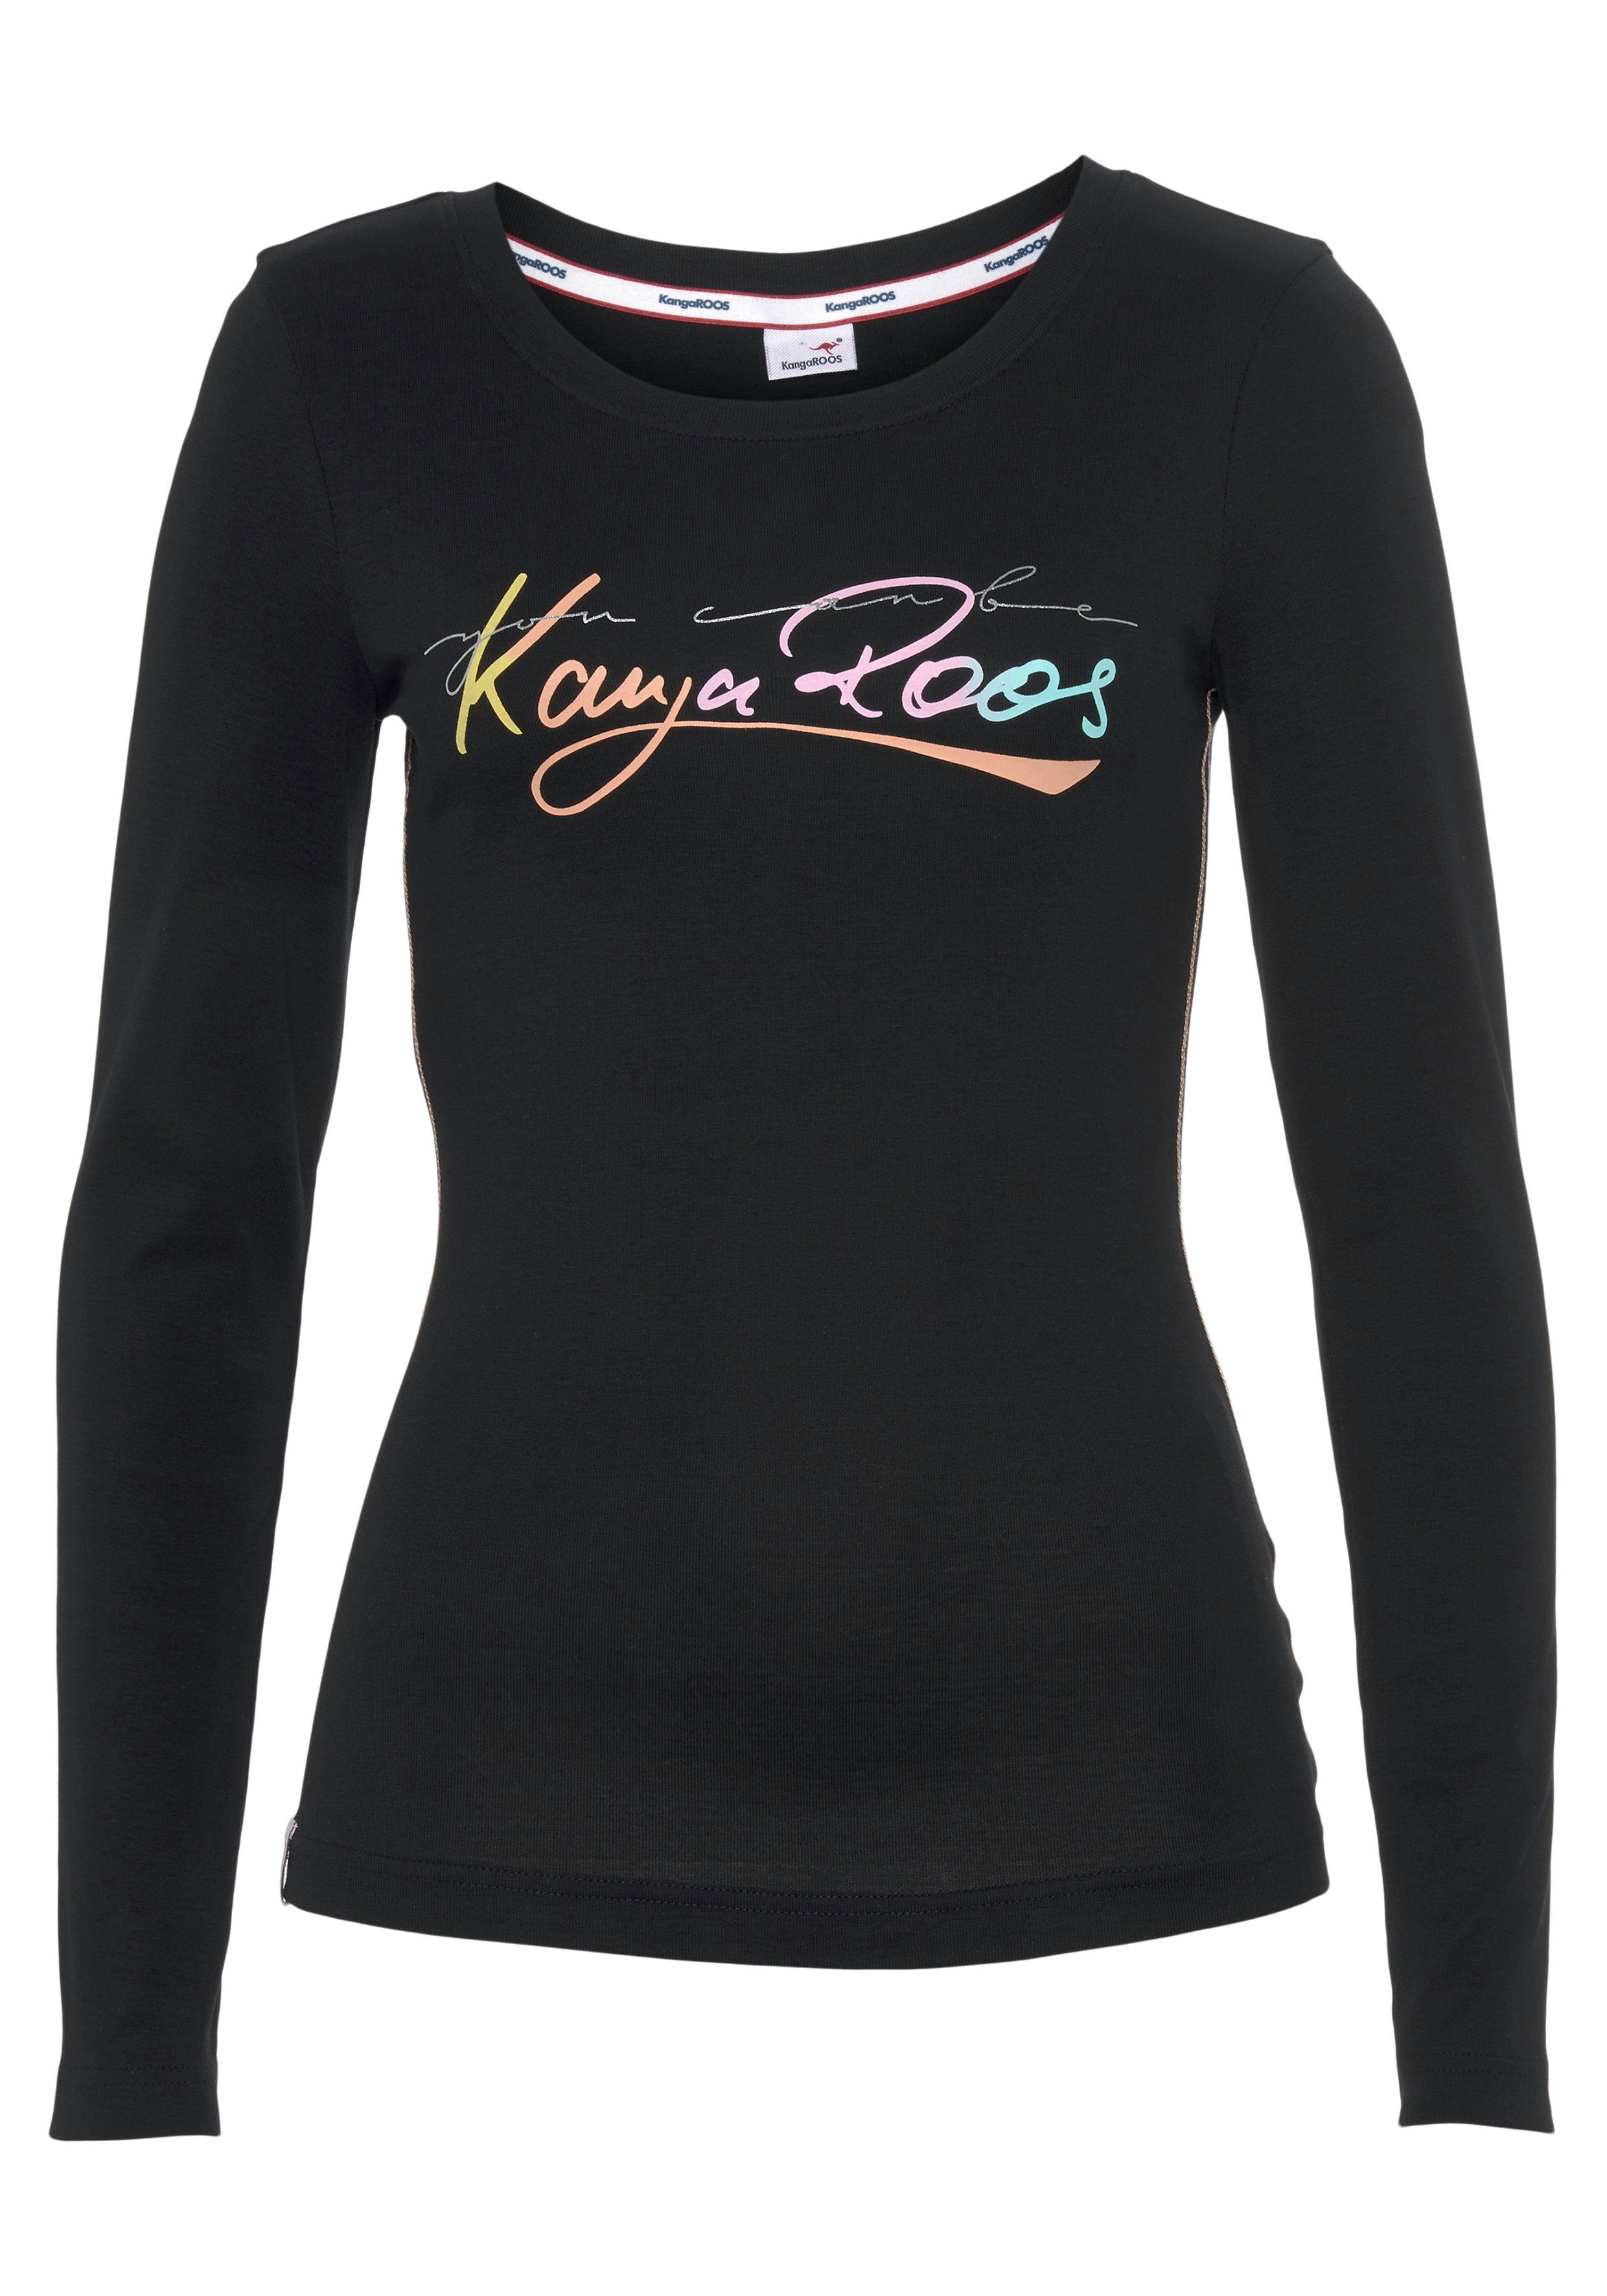 farbigen trendig KOLLEKTION Langarmshirt - NEUE schwarz mit KangaROOS Logoschriftzug